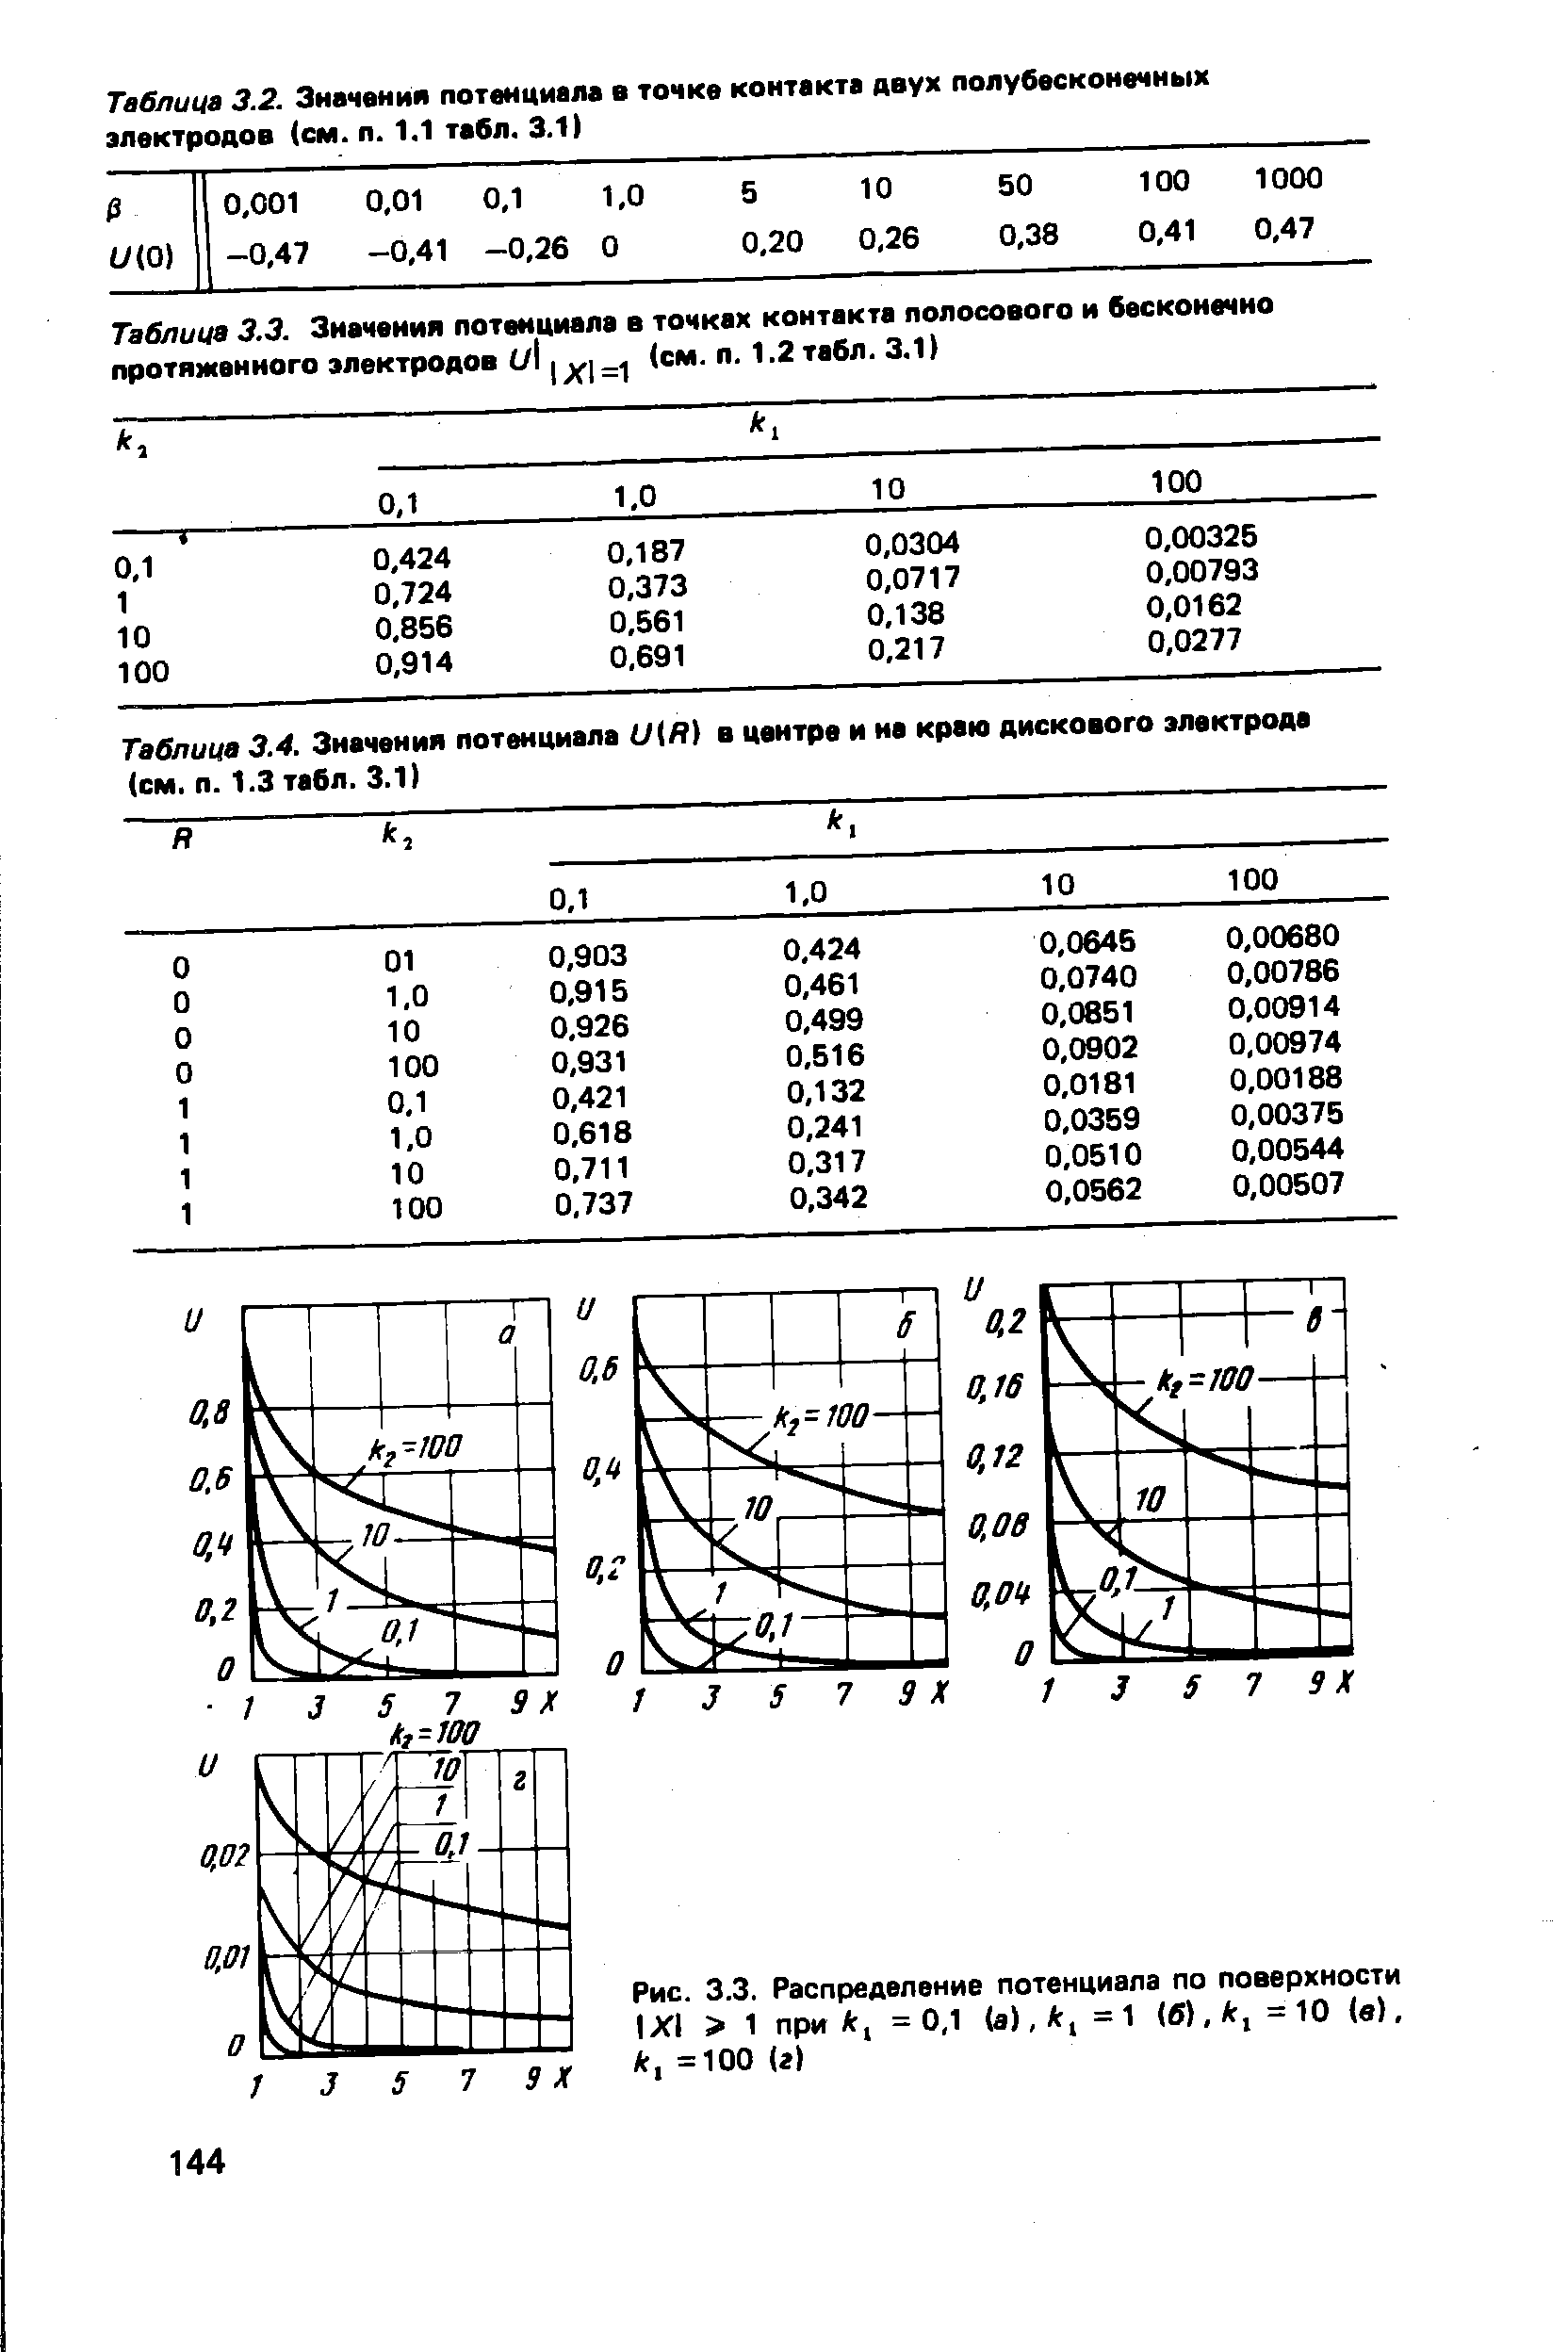 Таблица 3.4. <a href="/info/589327">Значения потенциала</a> UiR) в центре и на краю дискового электрода 
